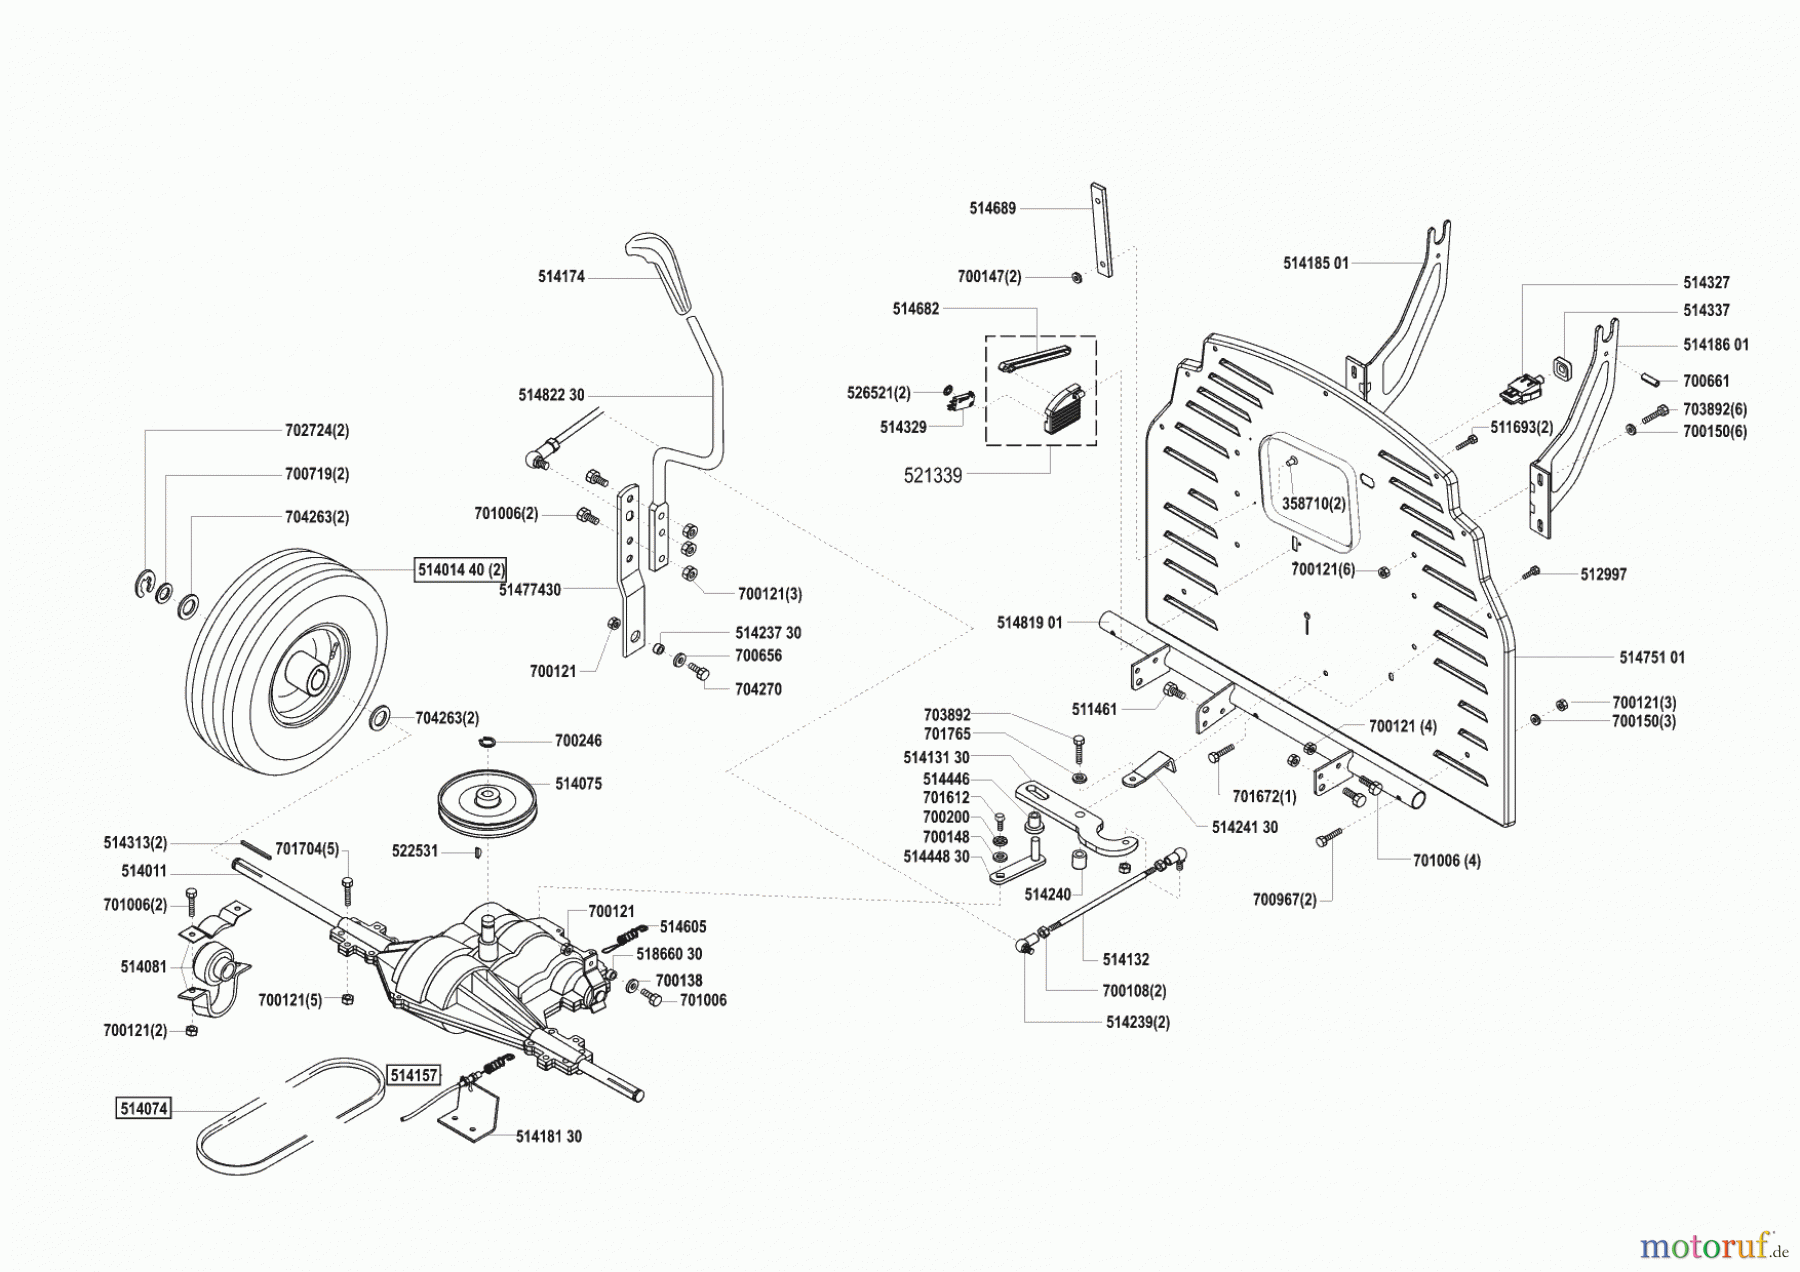  Ginge Gartentechnik Rasentraktor T 800 vor 02/2001 Seite 3